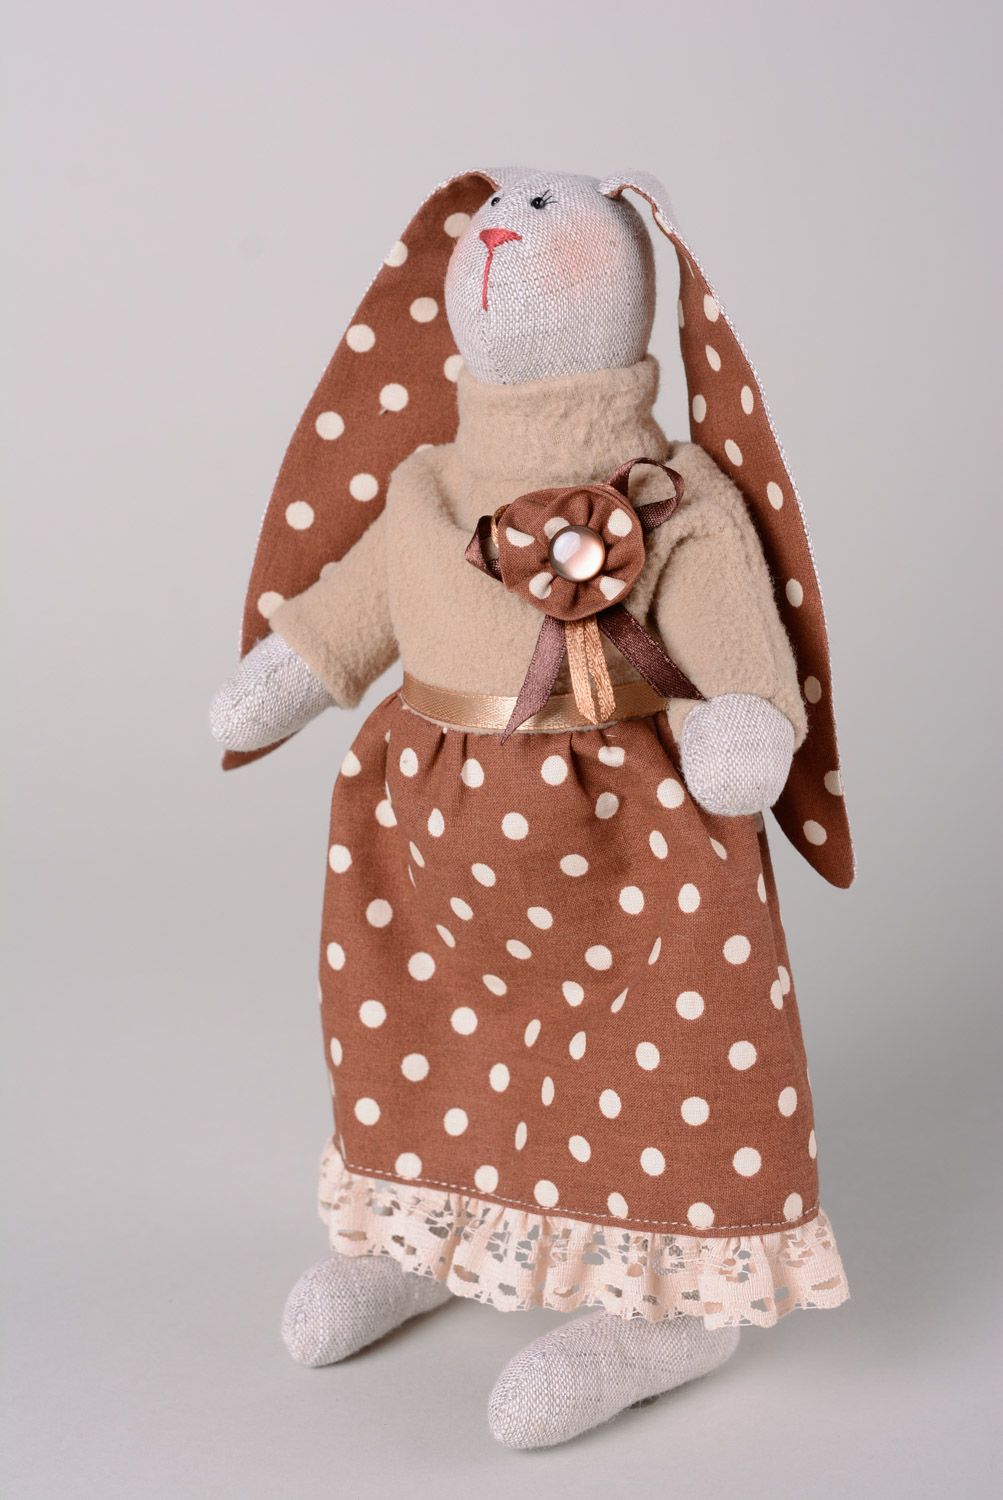 Handmade designer soft toy rabbit sewn of natural fabrics in polka dot dress photo 1